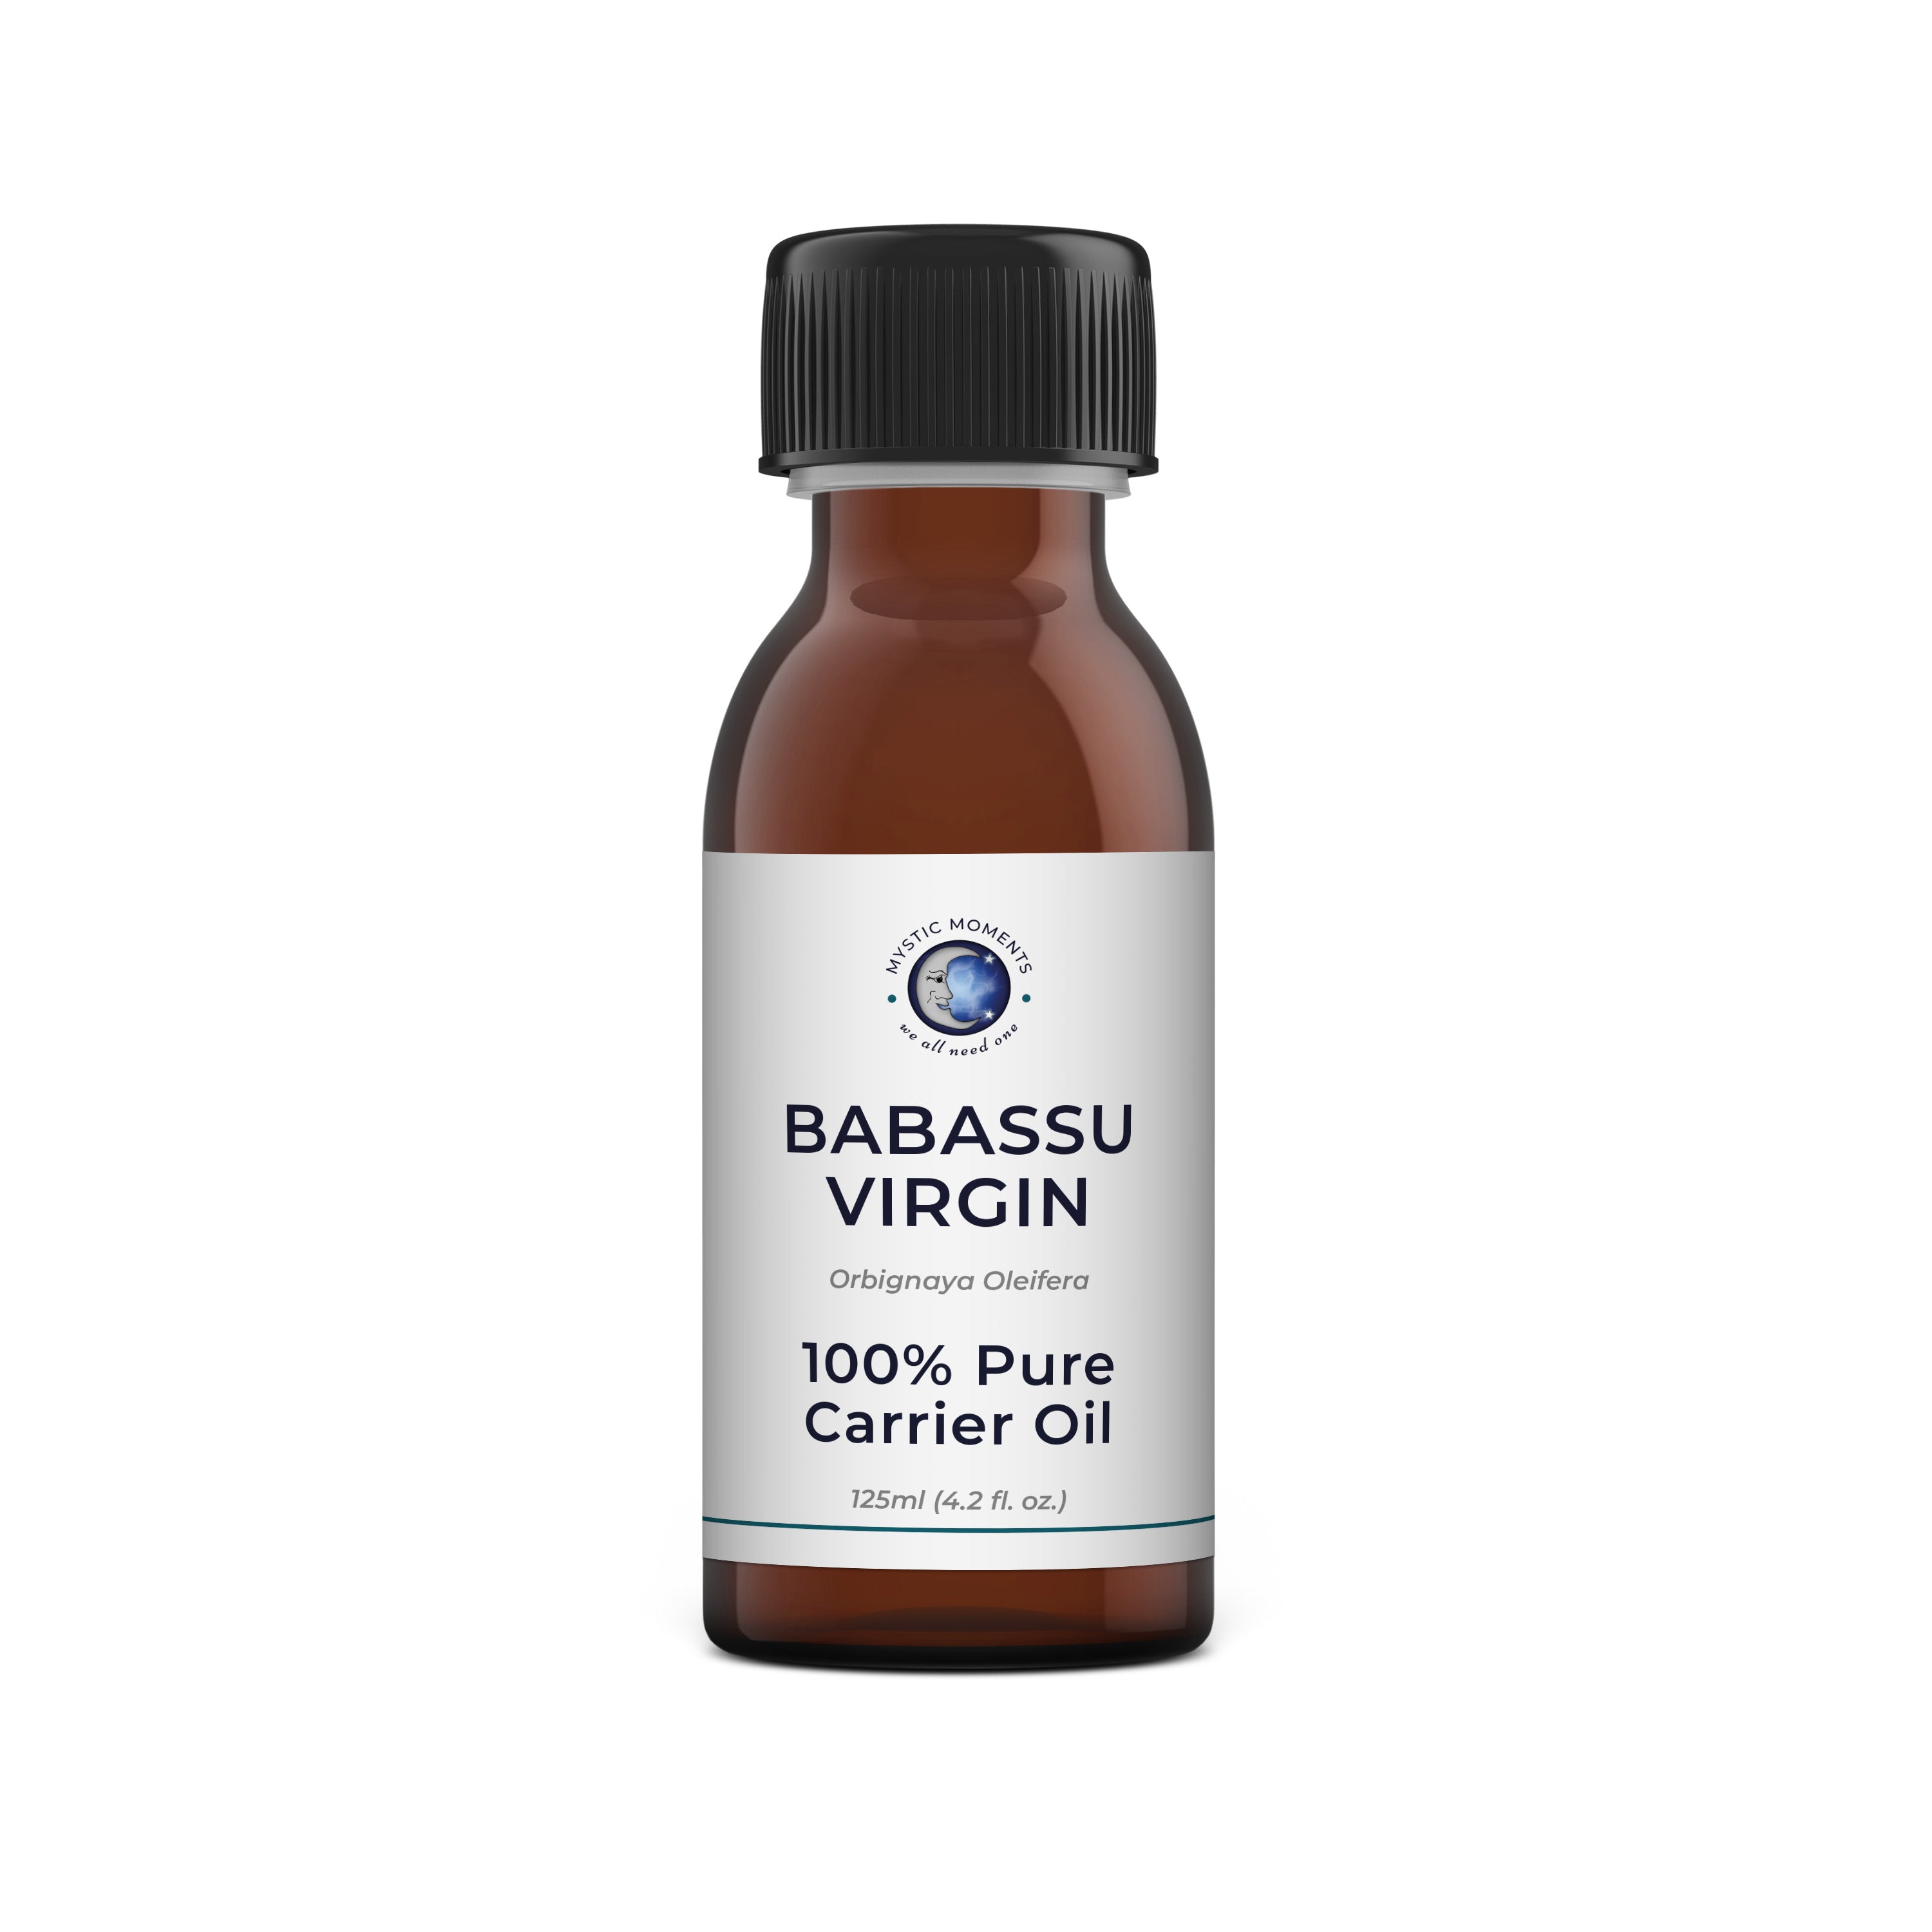 Babassu Virgin Carrier Oil